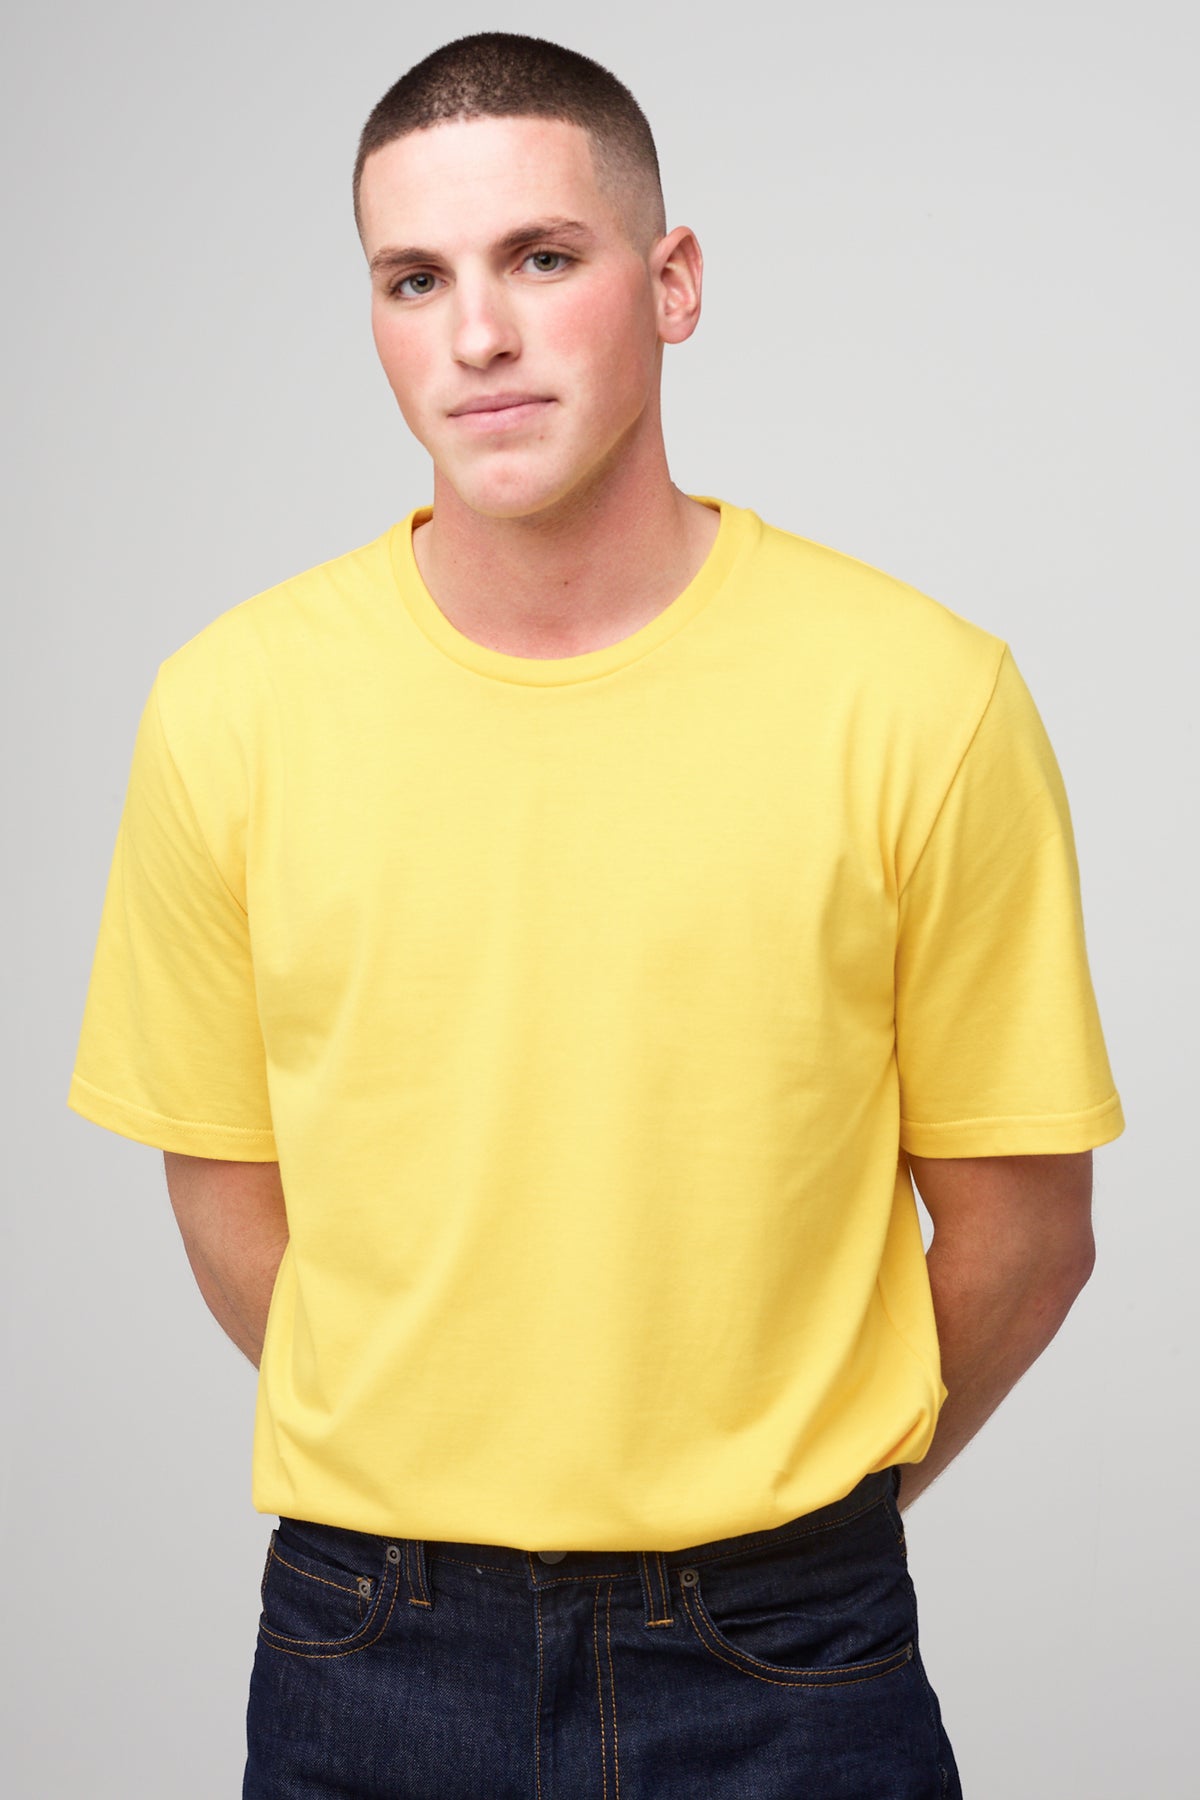 
            Brunet, white male in sunshine yellow short sleeve t-shirt 